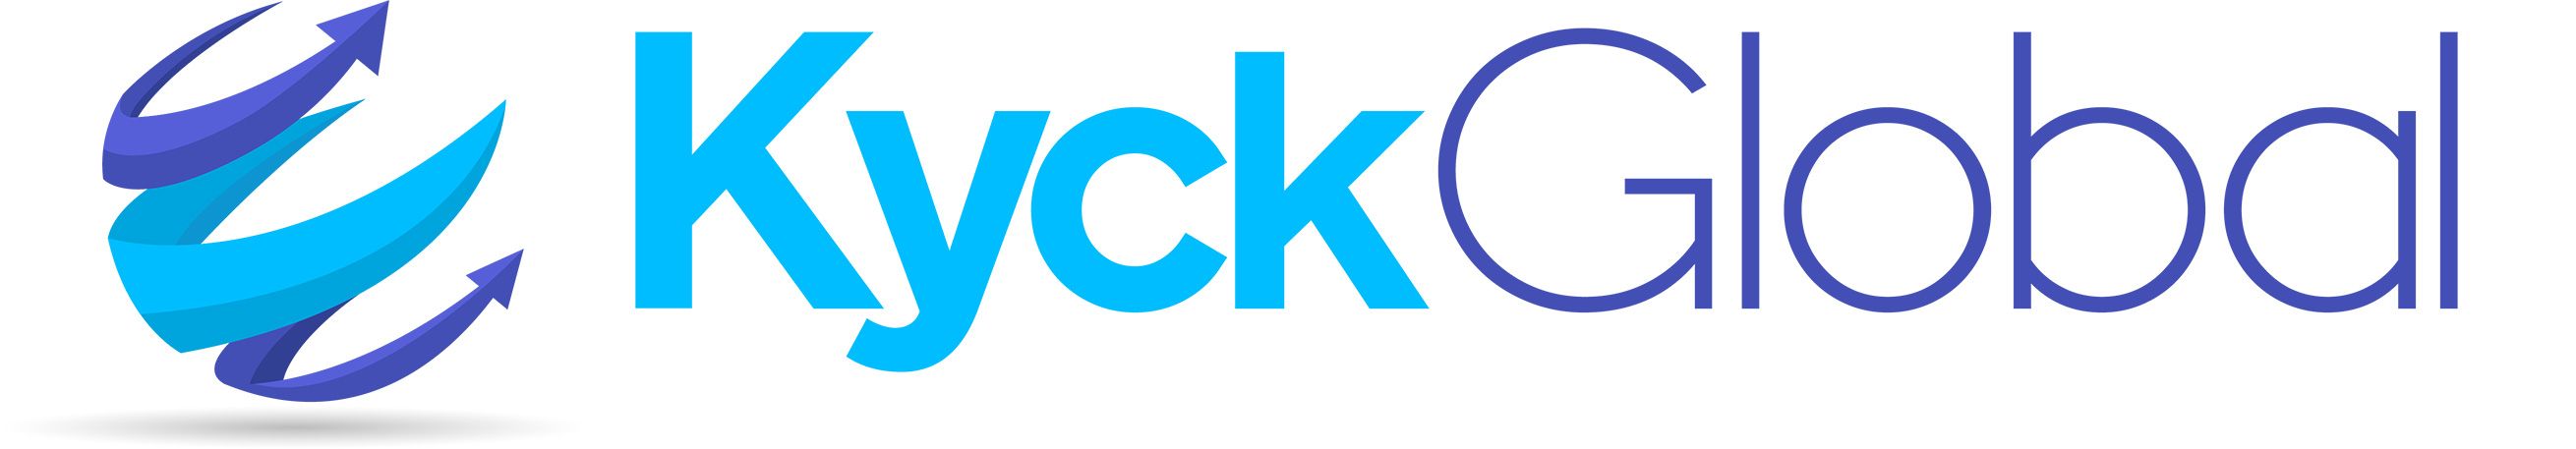 KyckGlobal Logo